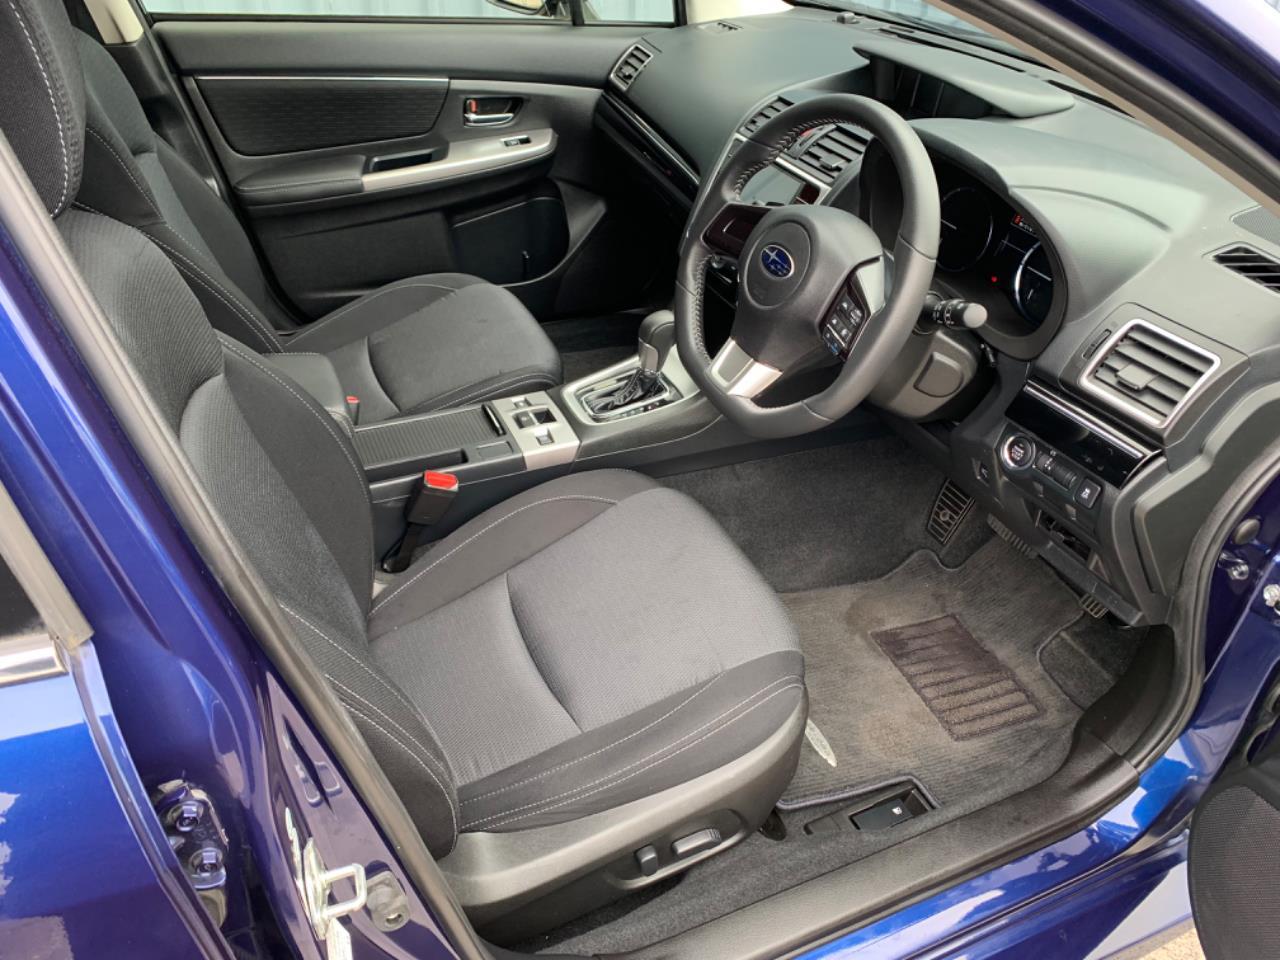 2015 Subaru Levorg